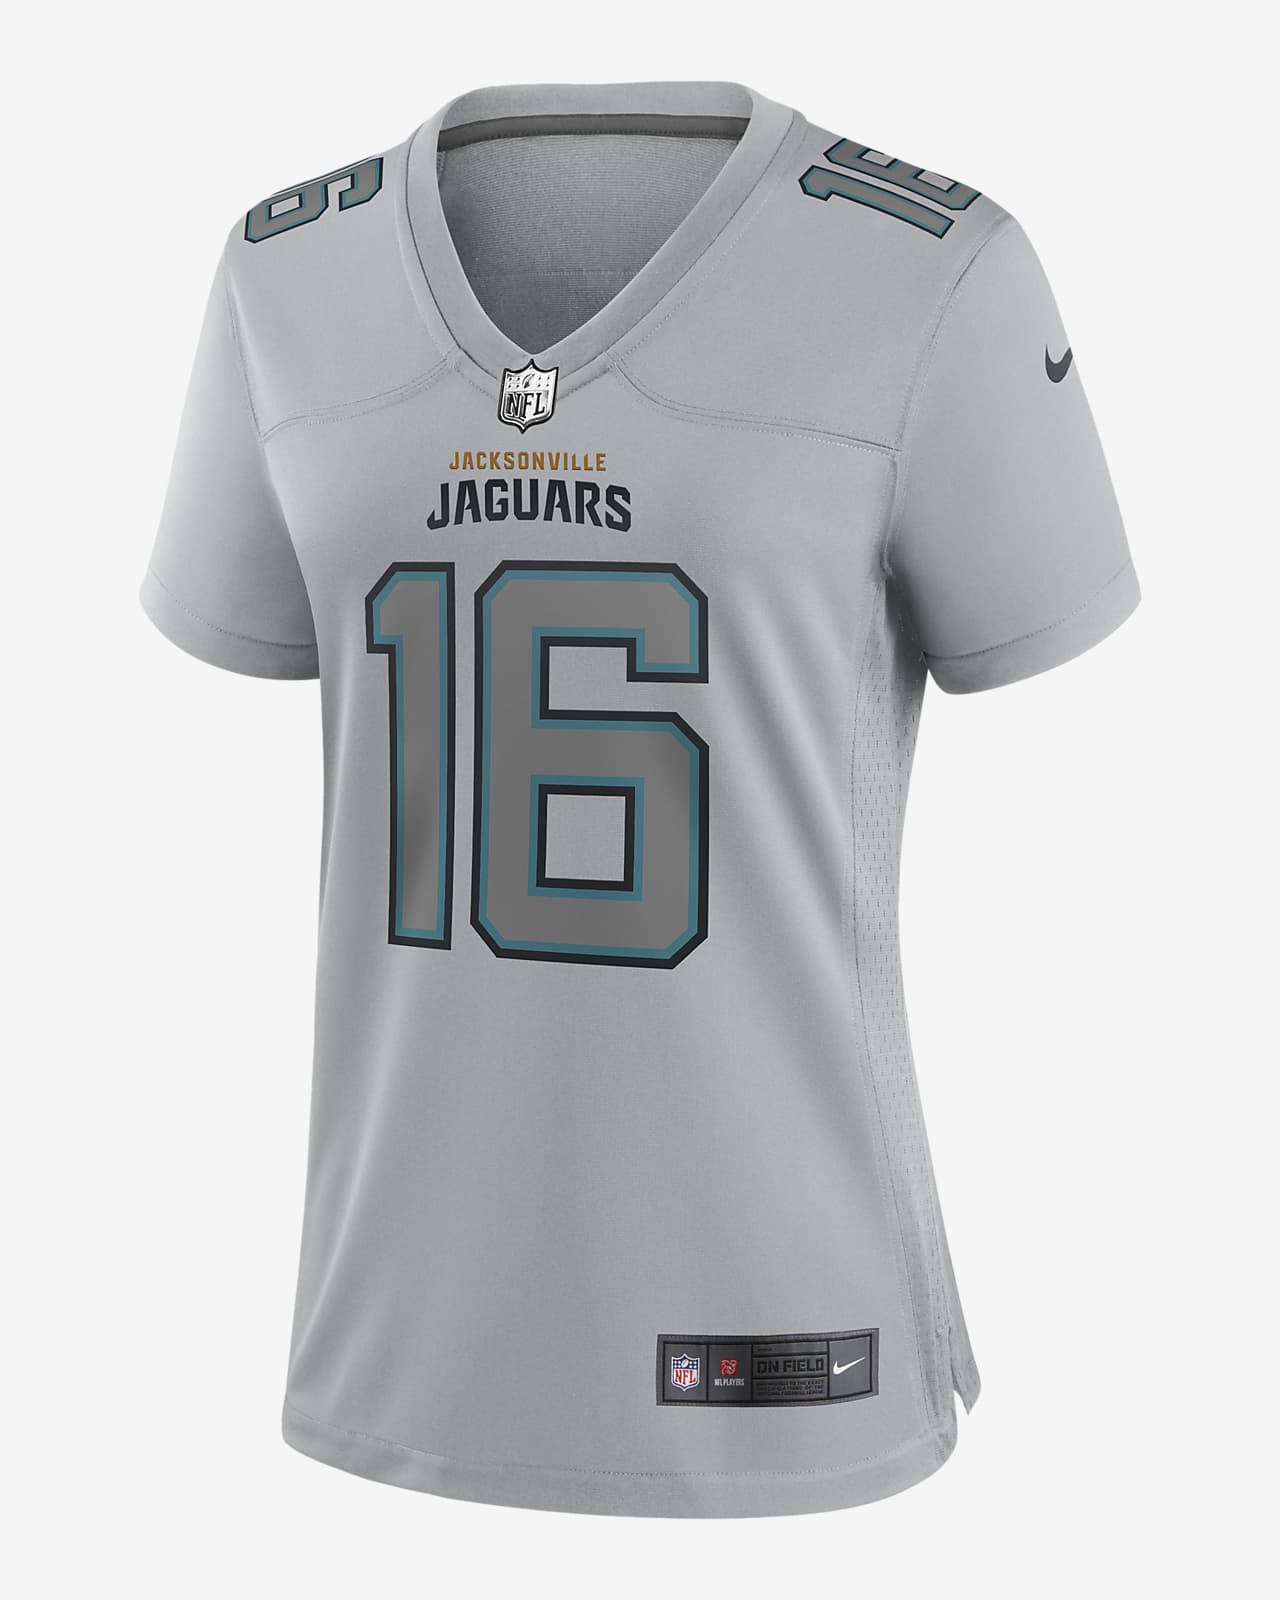 NFL Jacksonville Jaguars Atmosphere (Trevor Lawrence) Women's Fashion Football Jersey